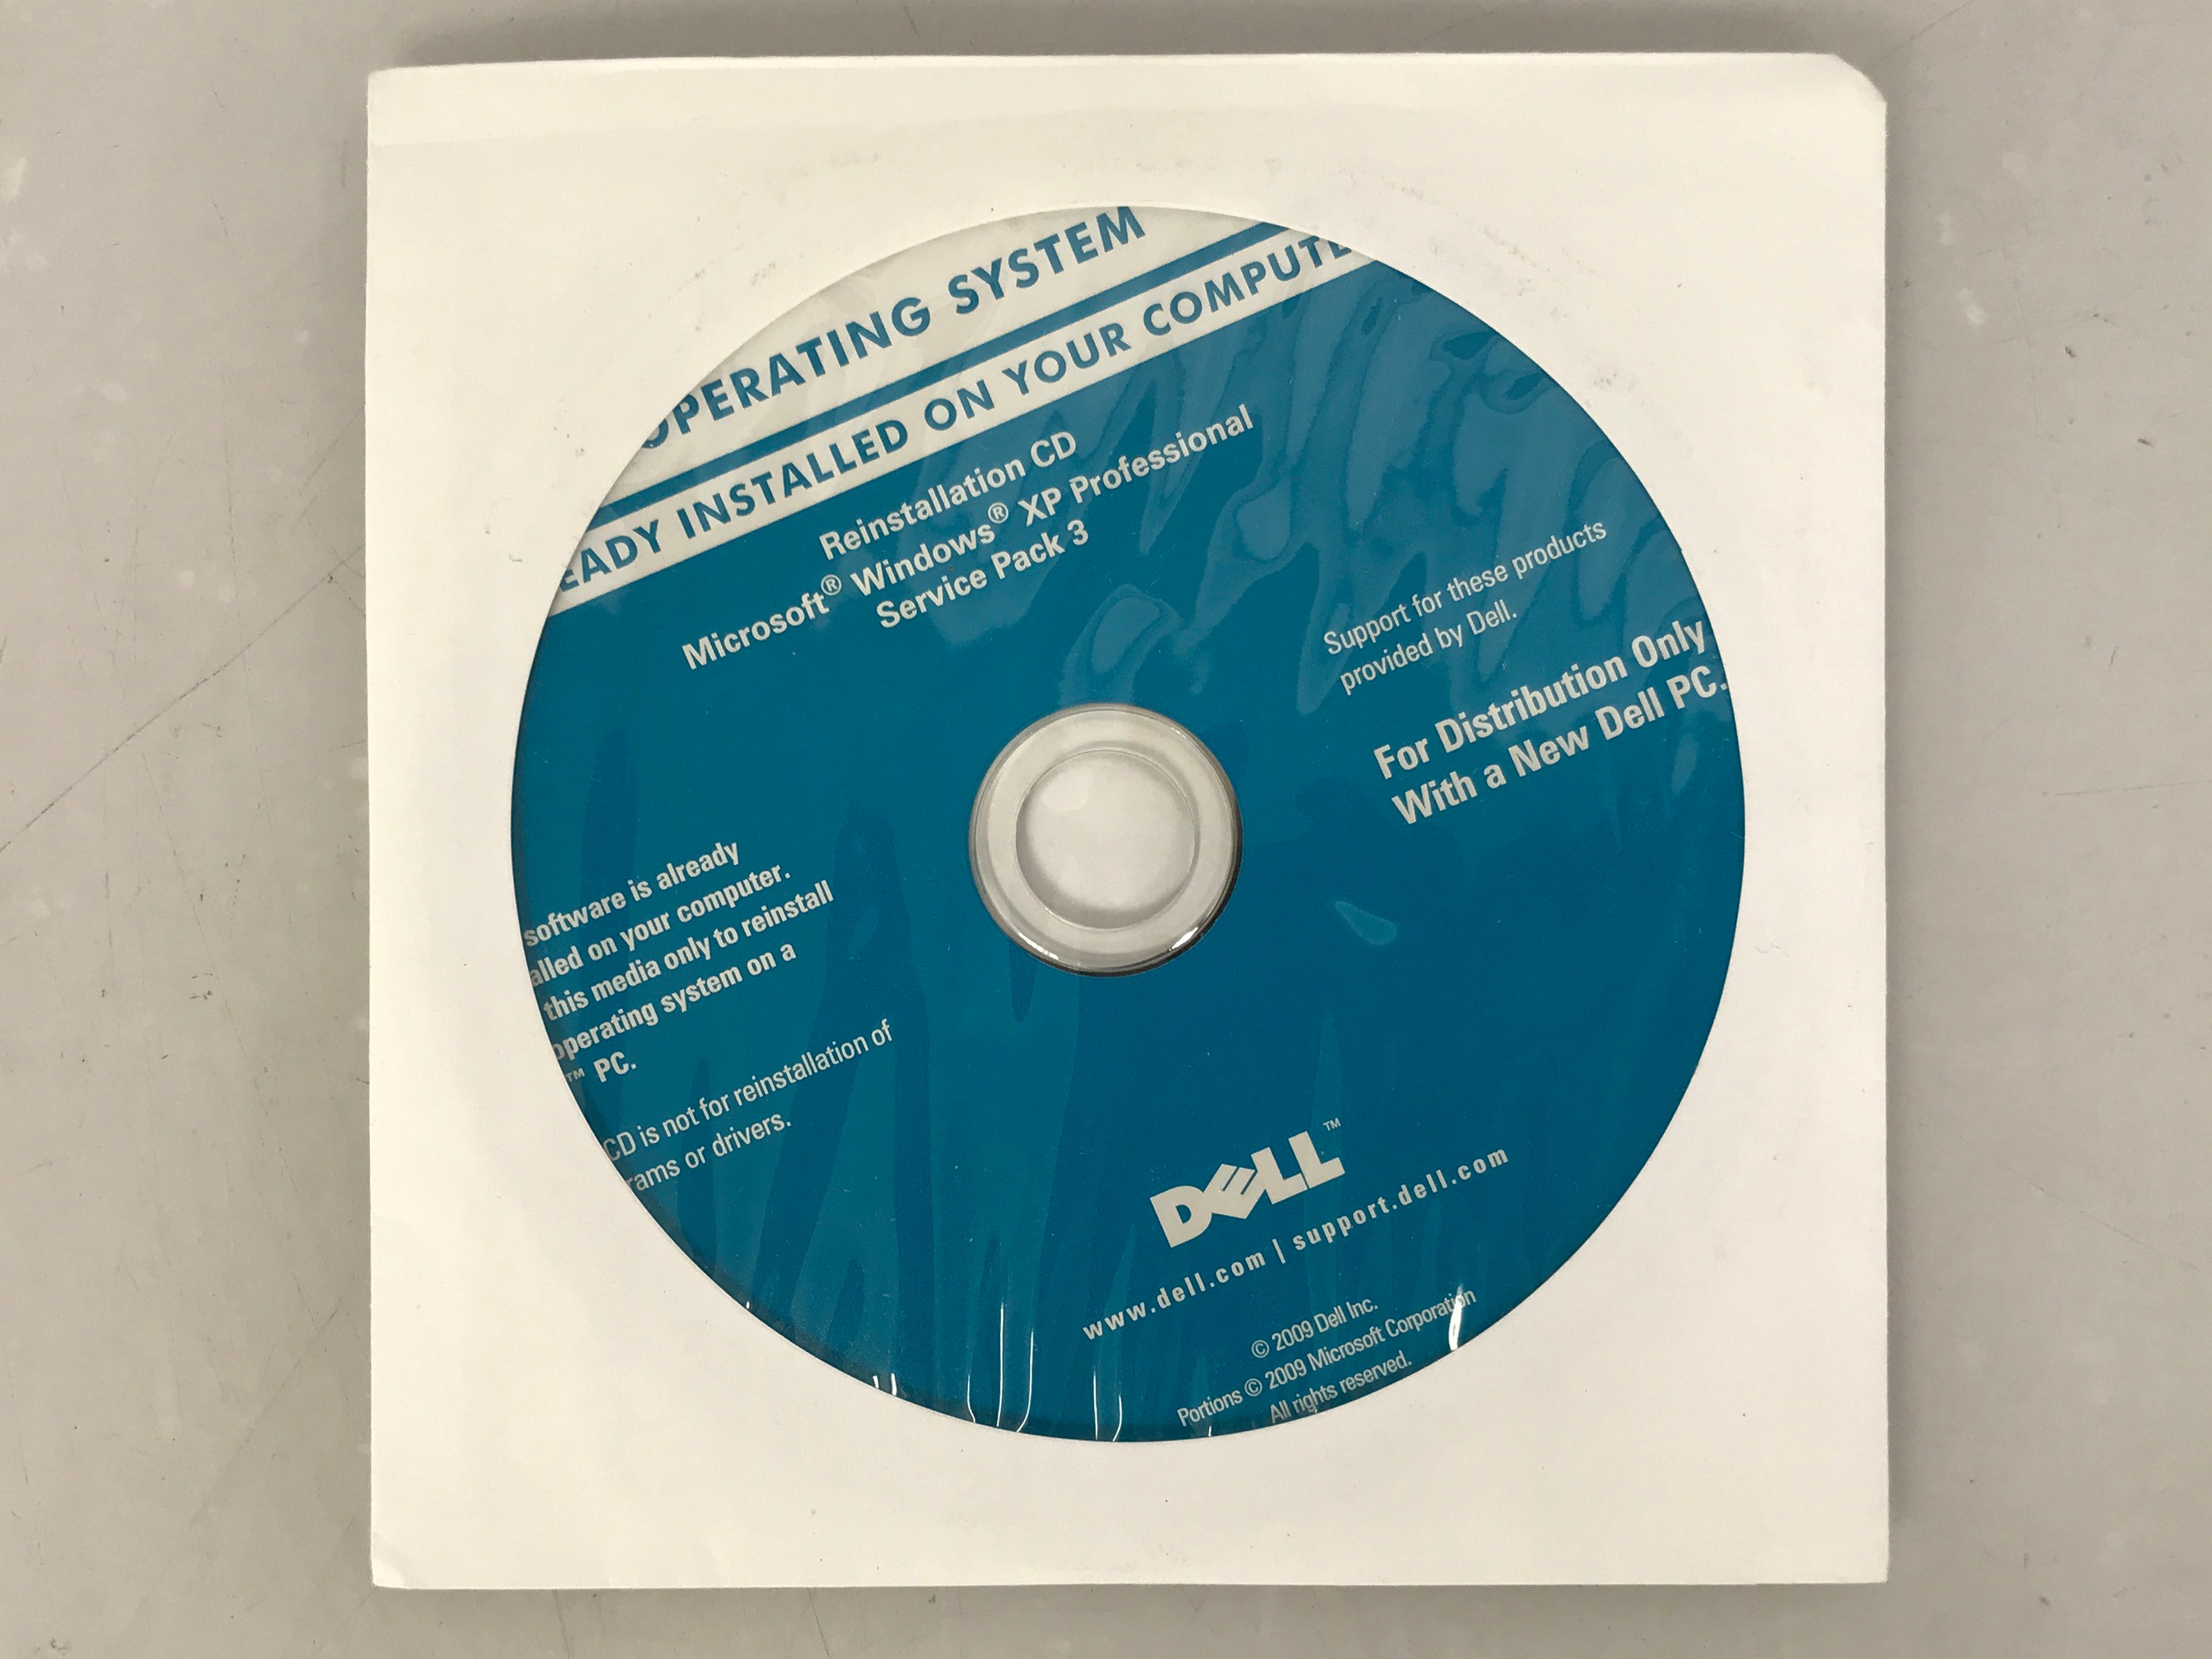 Microsoft Windows XP Professional Service Pack 3 Reinstallation CD